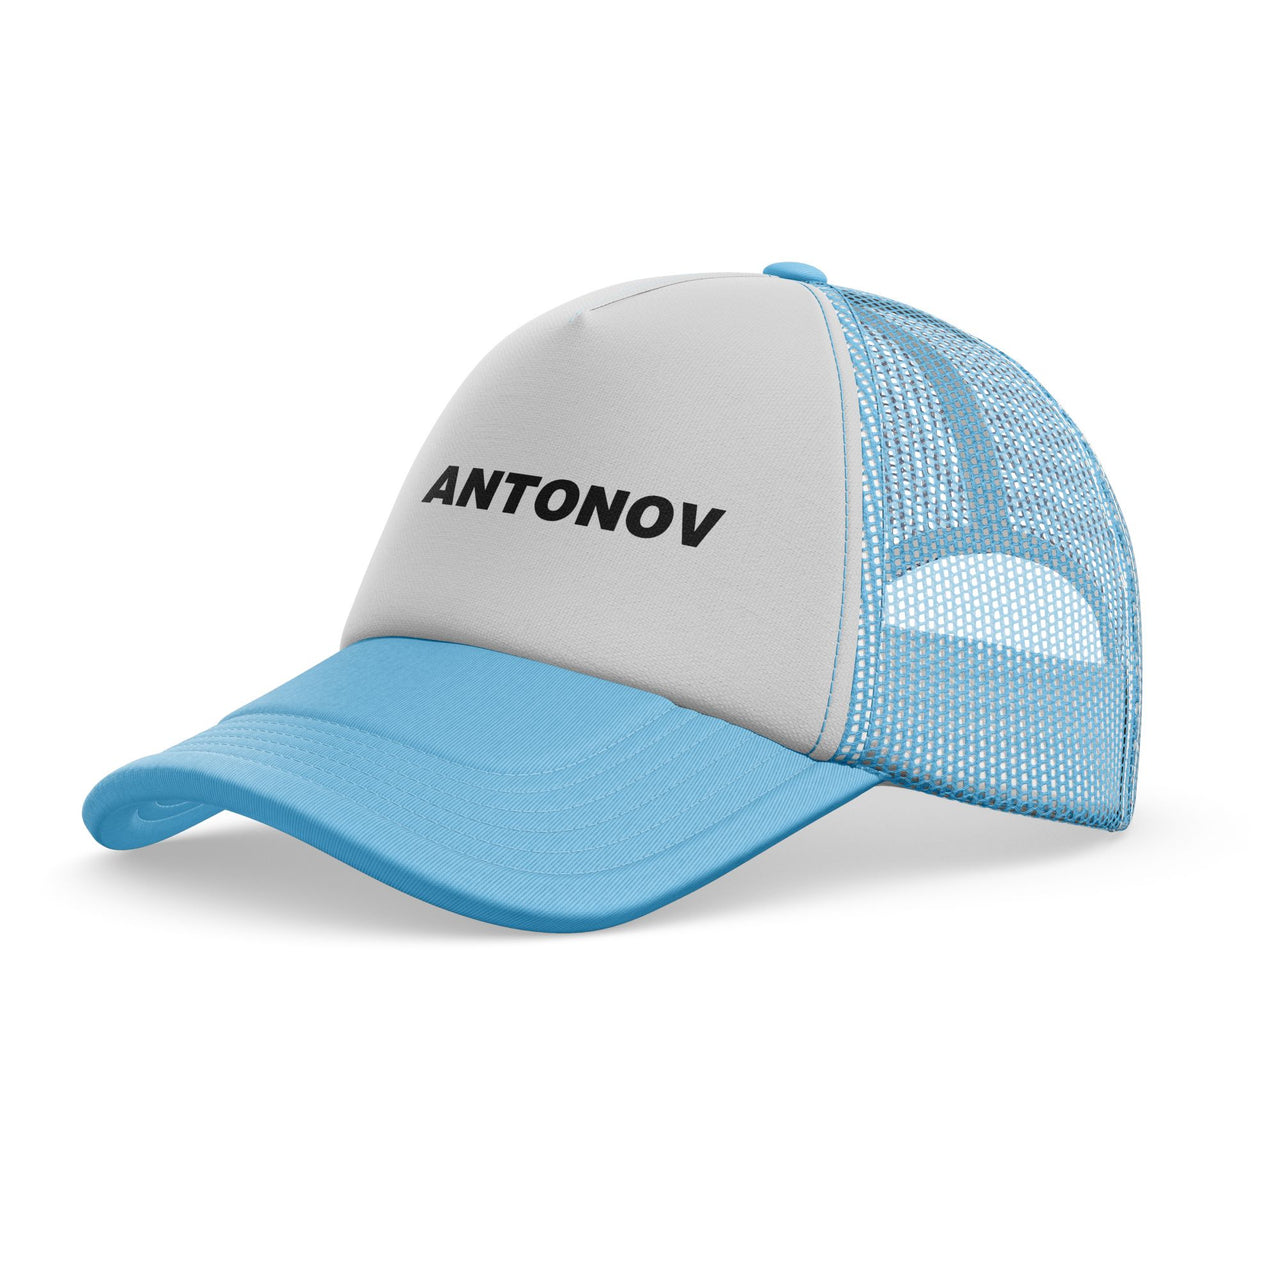 Antonov & Text Designed Trucker Caps & Hats